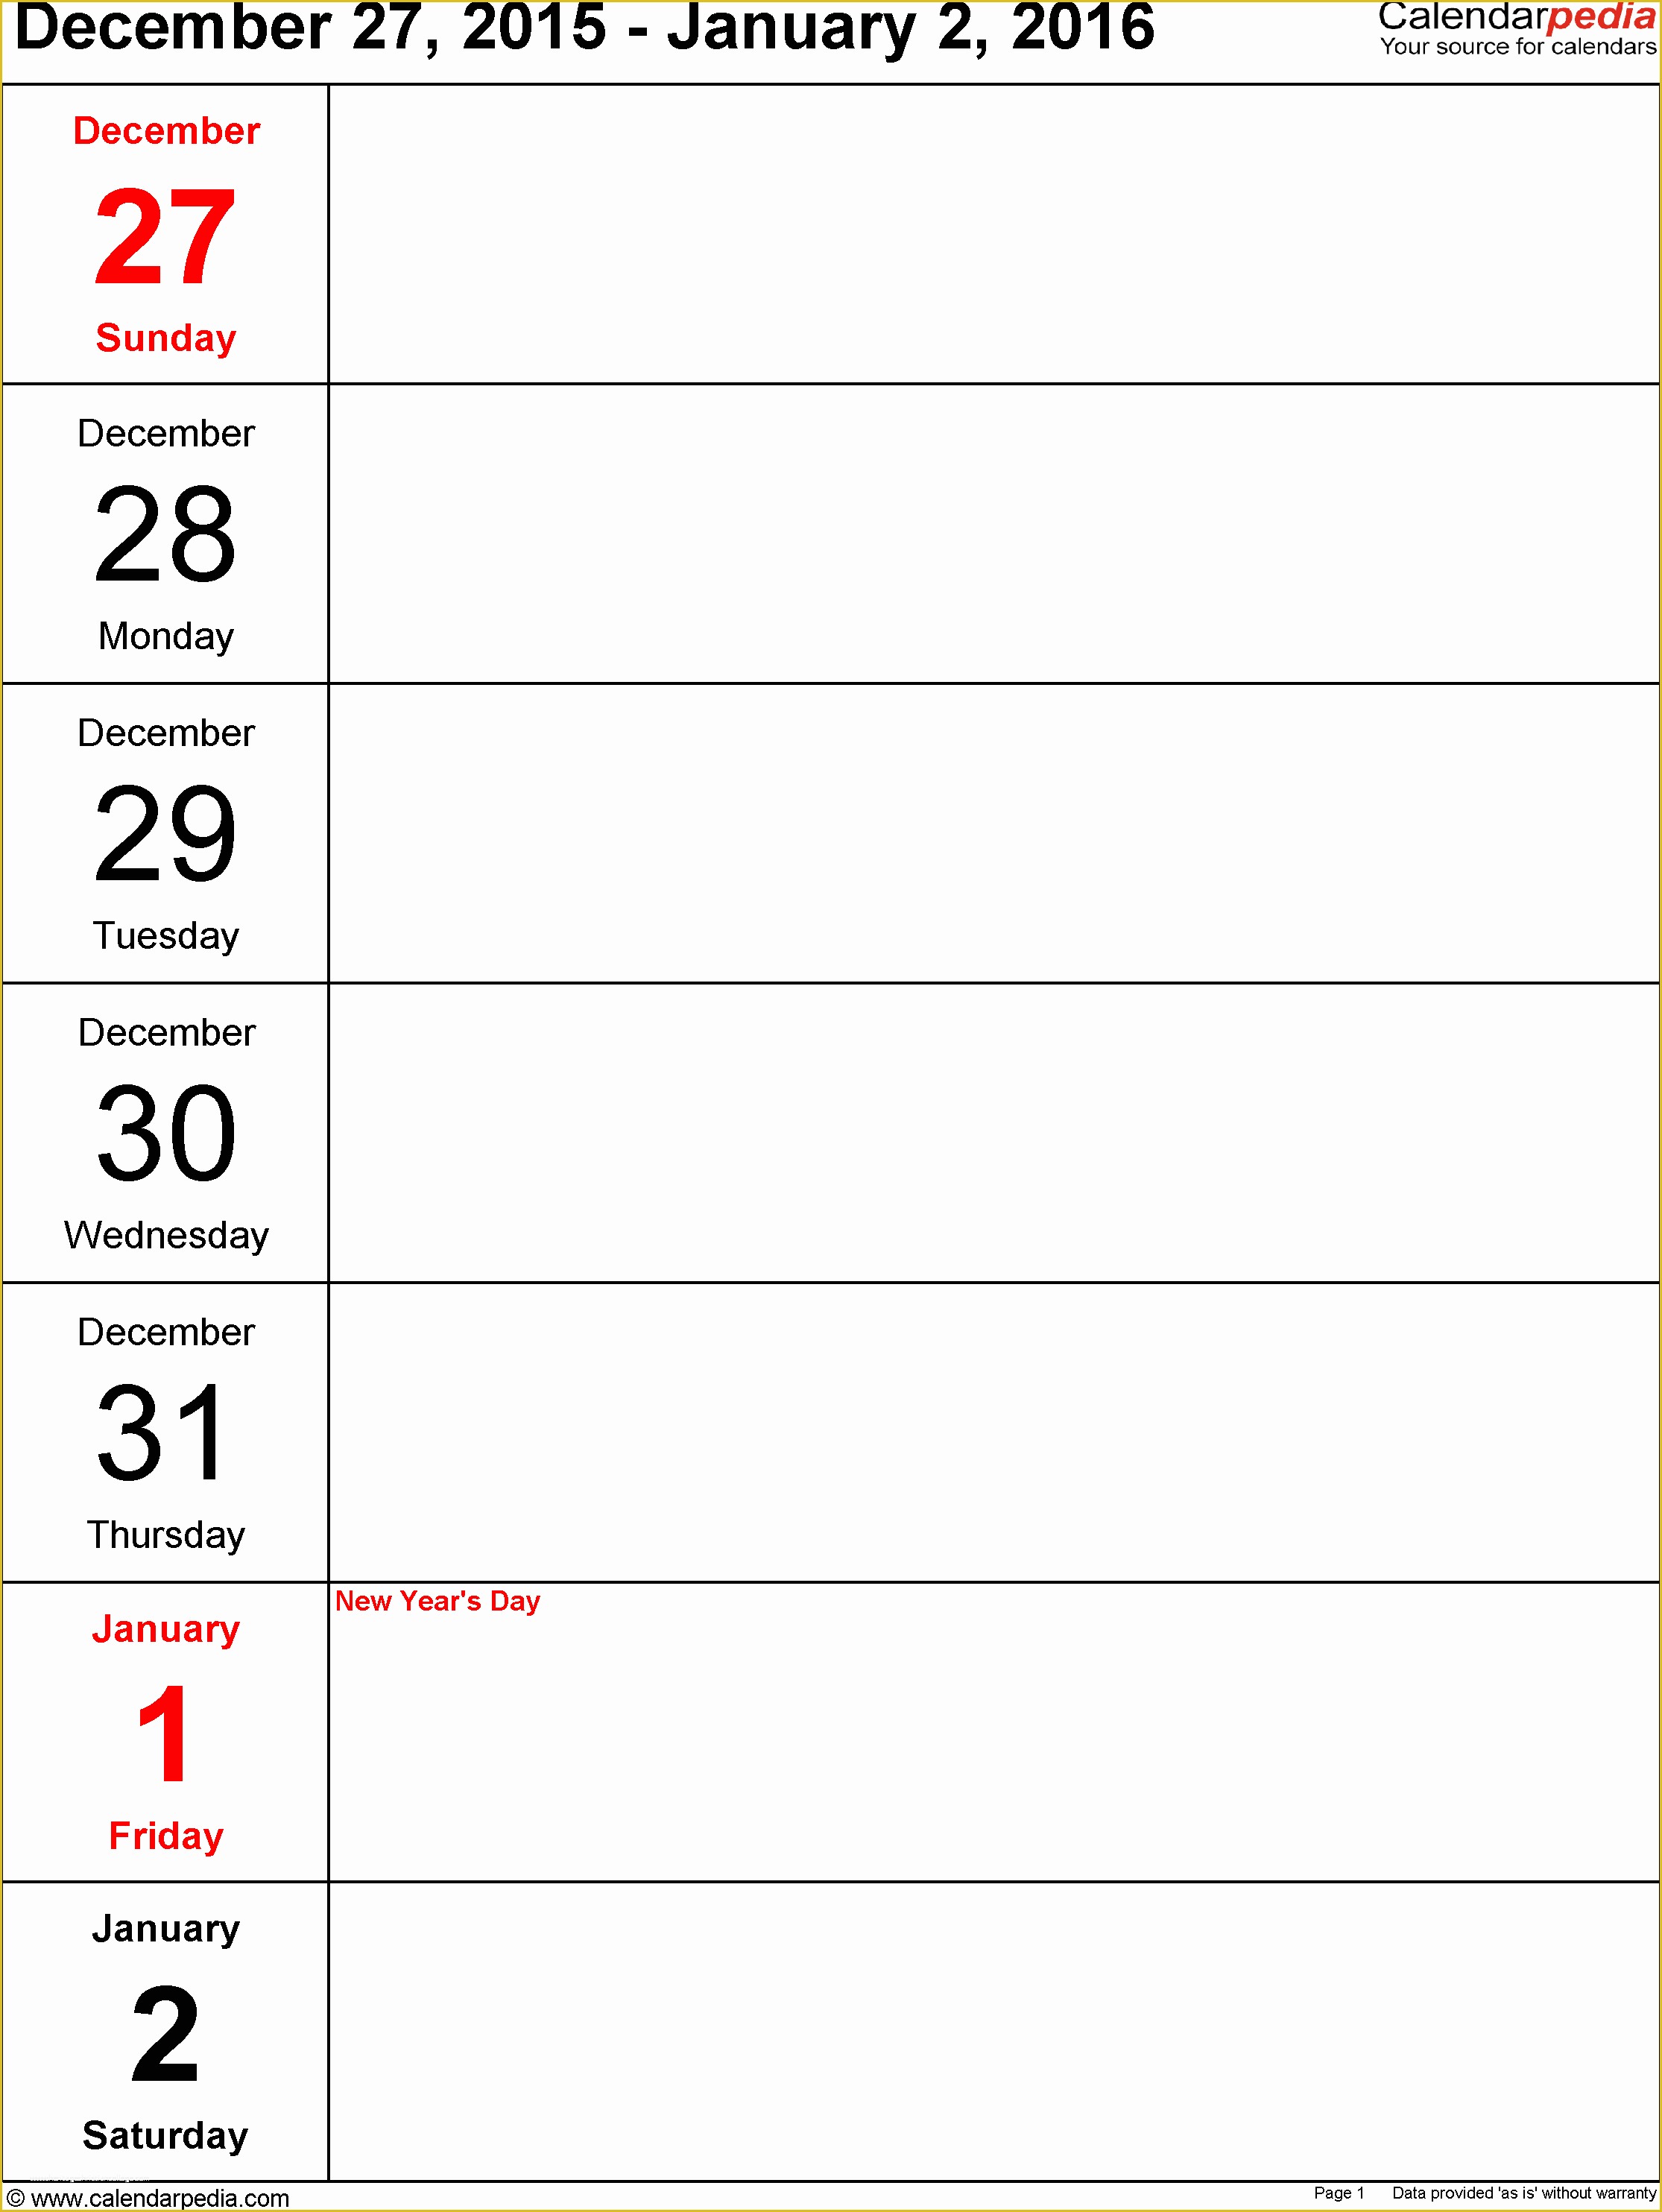 Free Weekly Planner Template Word Of Weekly Calendar 2016 for Word 12 Free Printable Templates